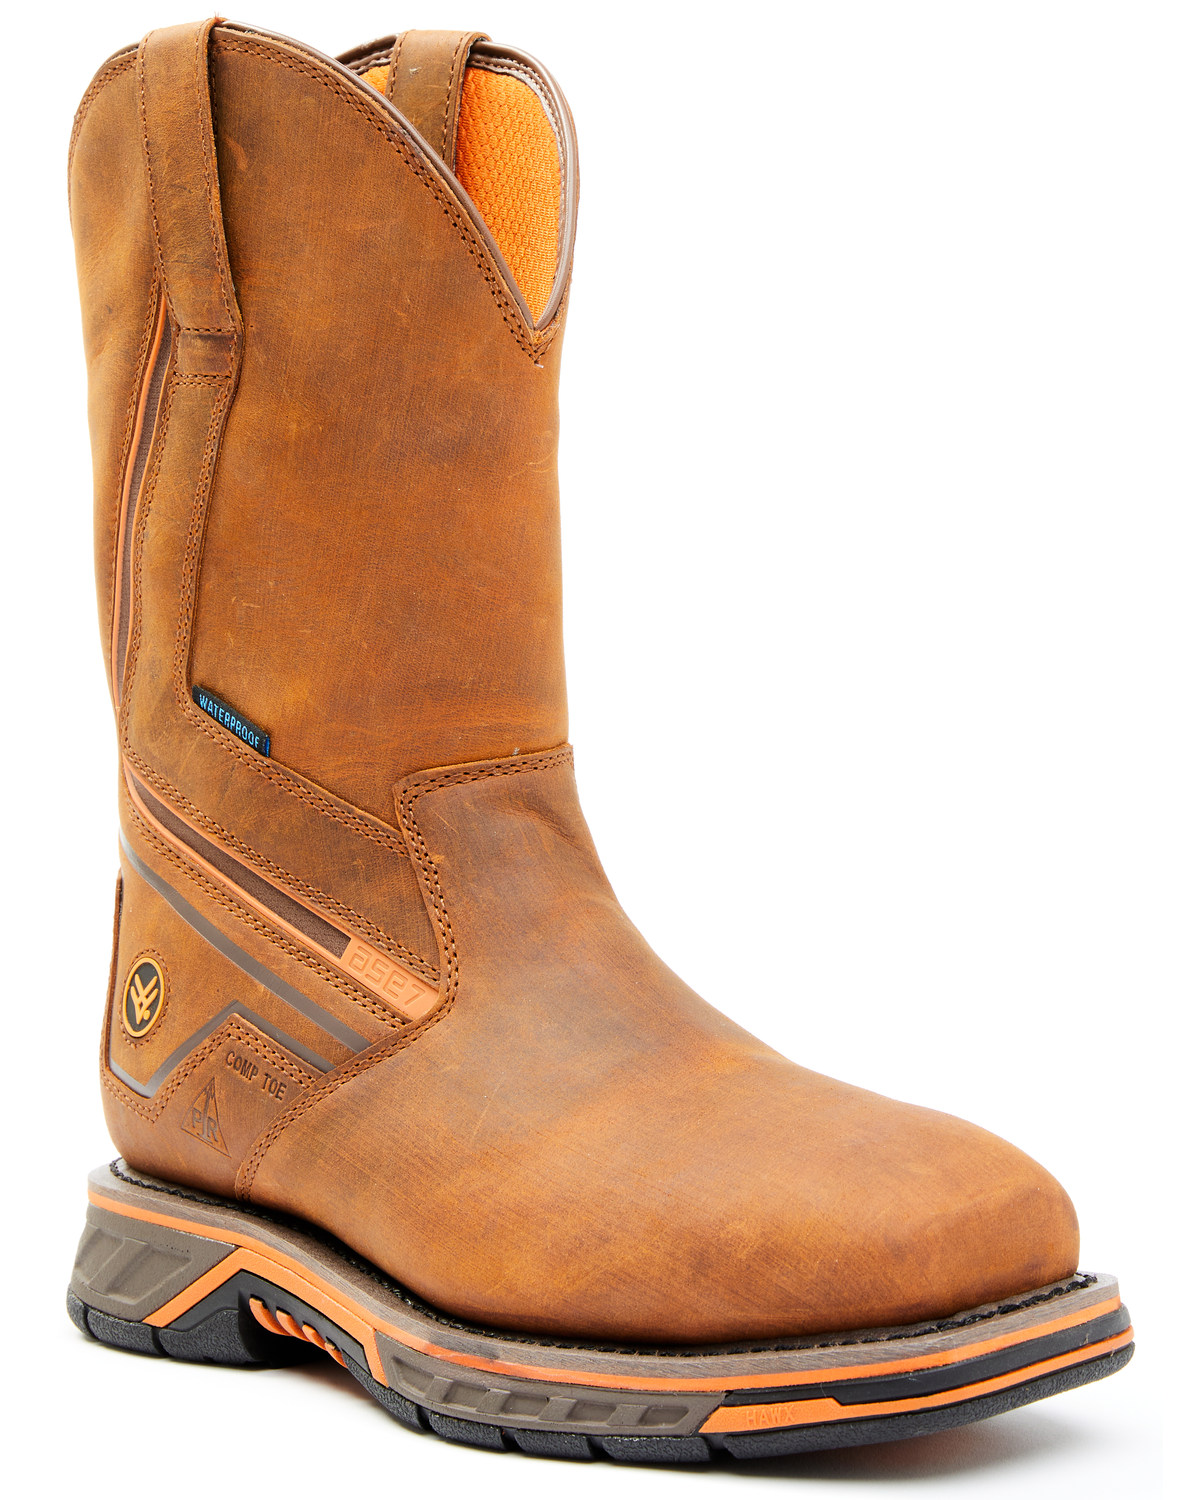 Hawx Men's Radian Waterproof Western Work Boots - Composite Toe